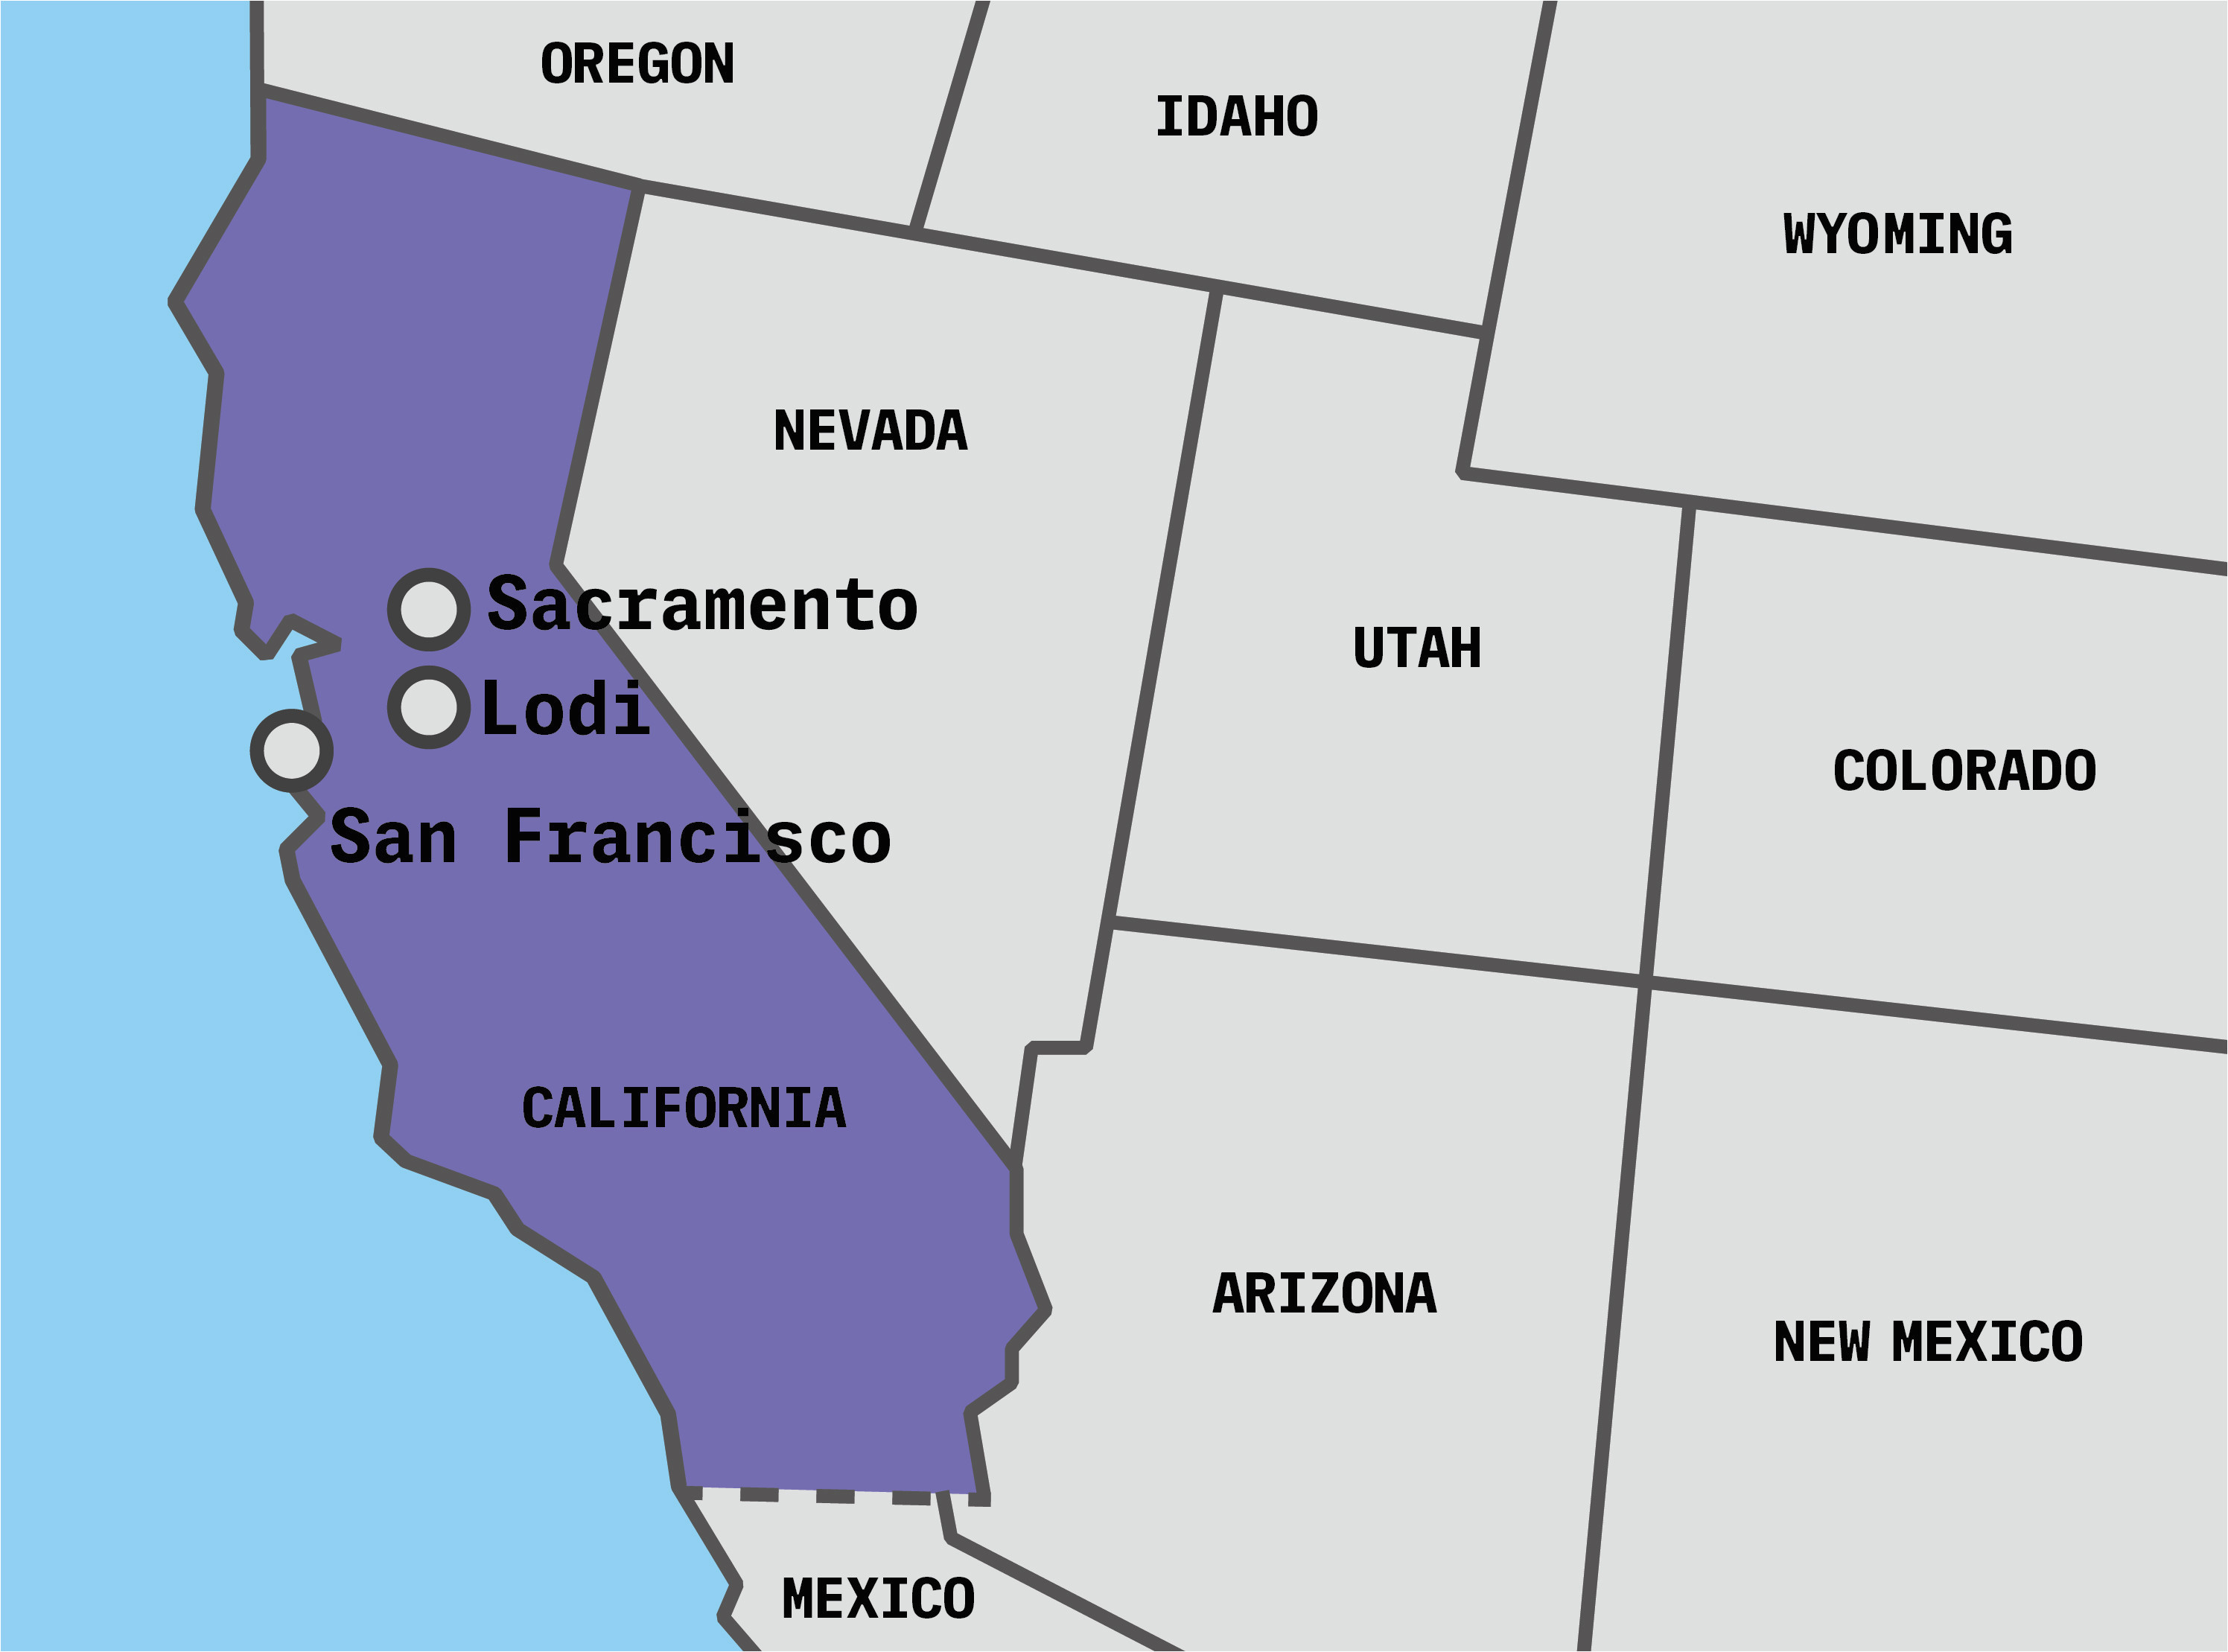 sex offender registry california map ettcarworld com